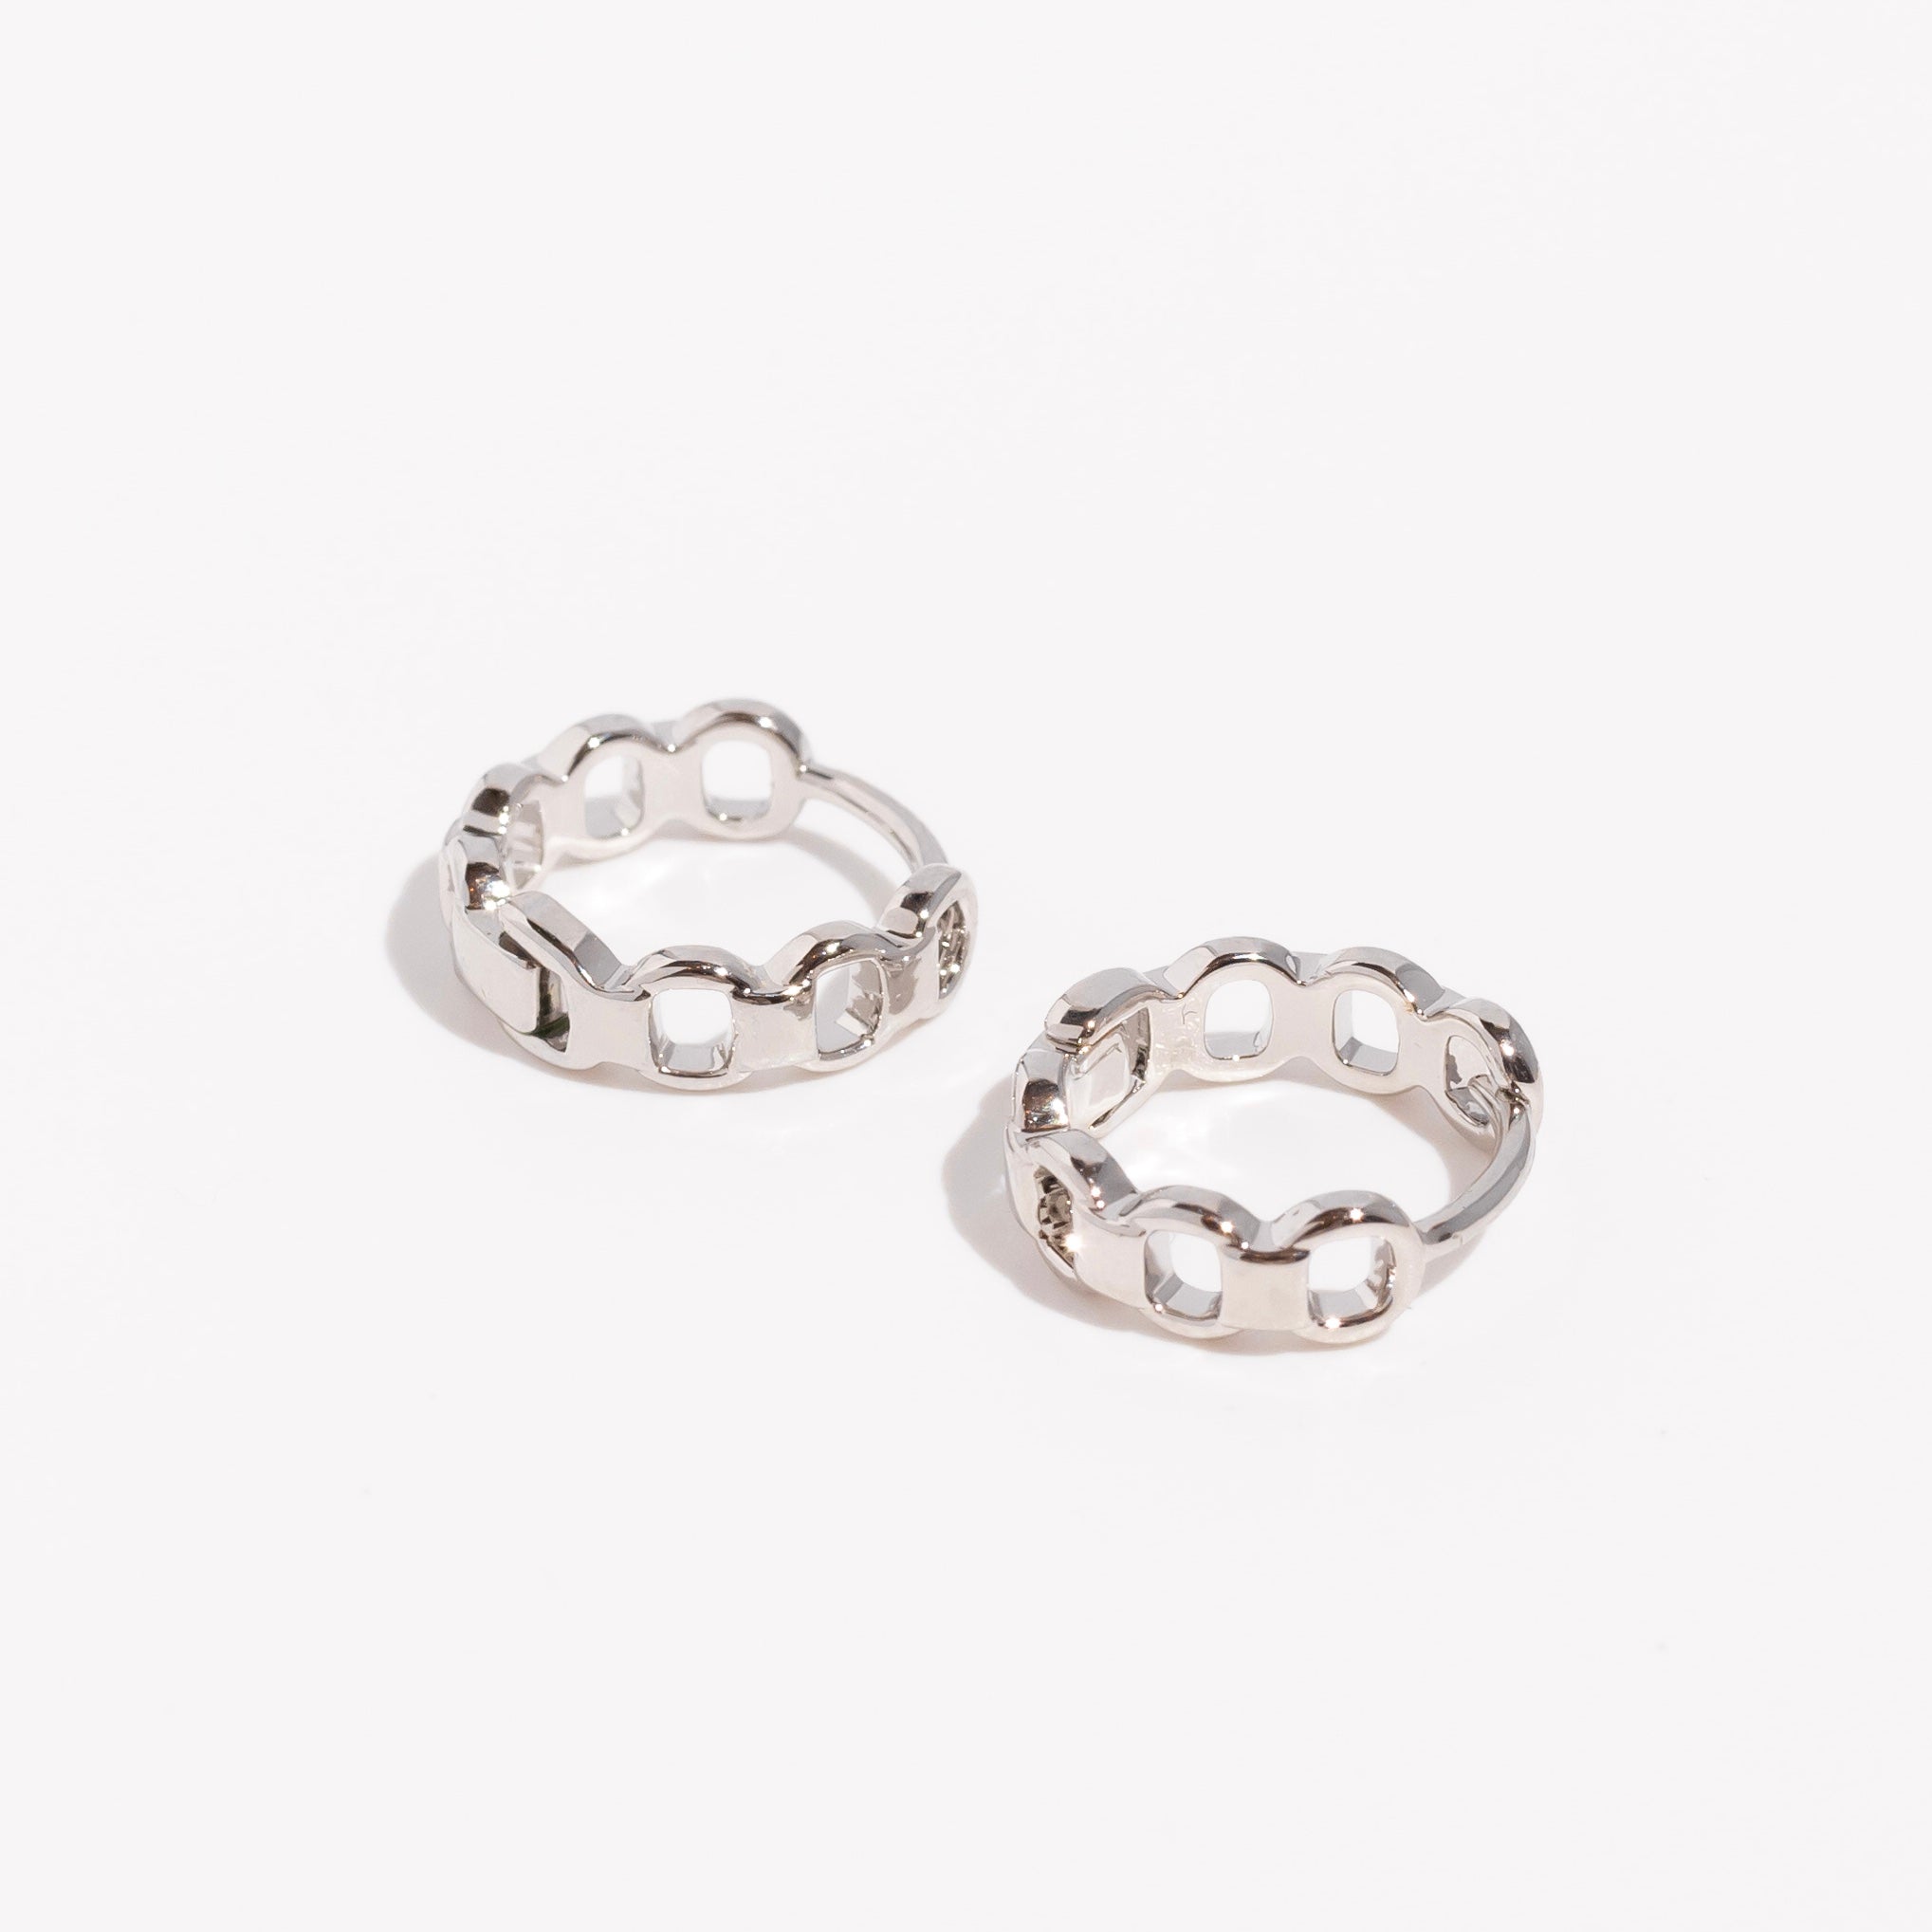 petite chain style ring earrings